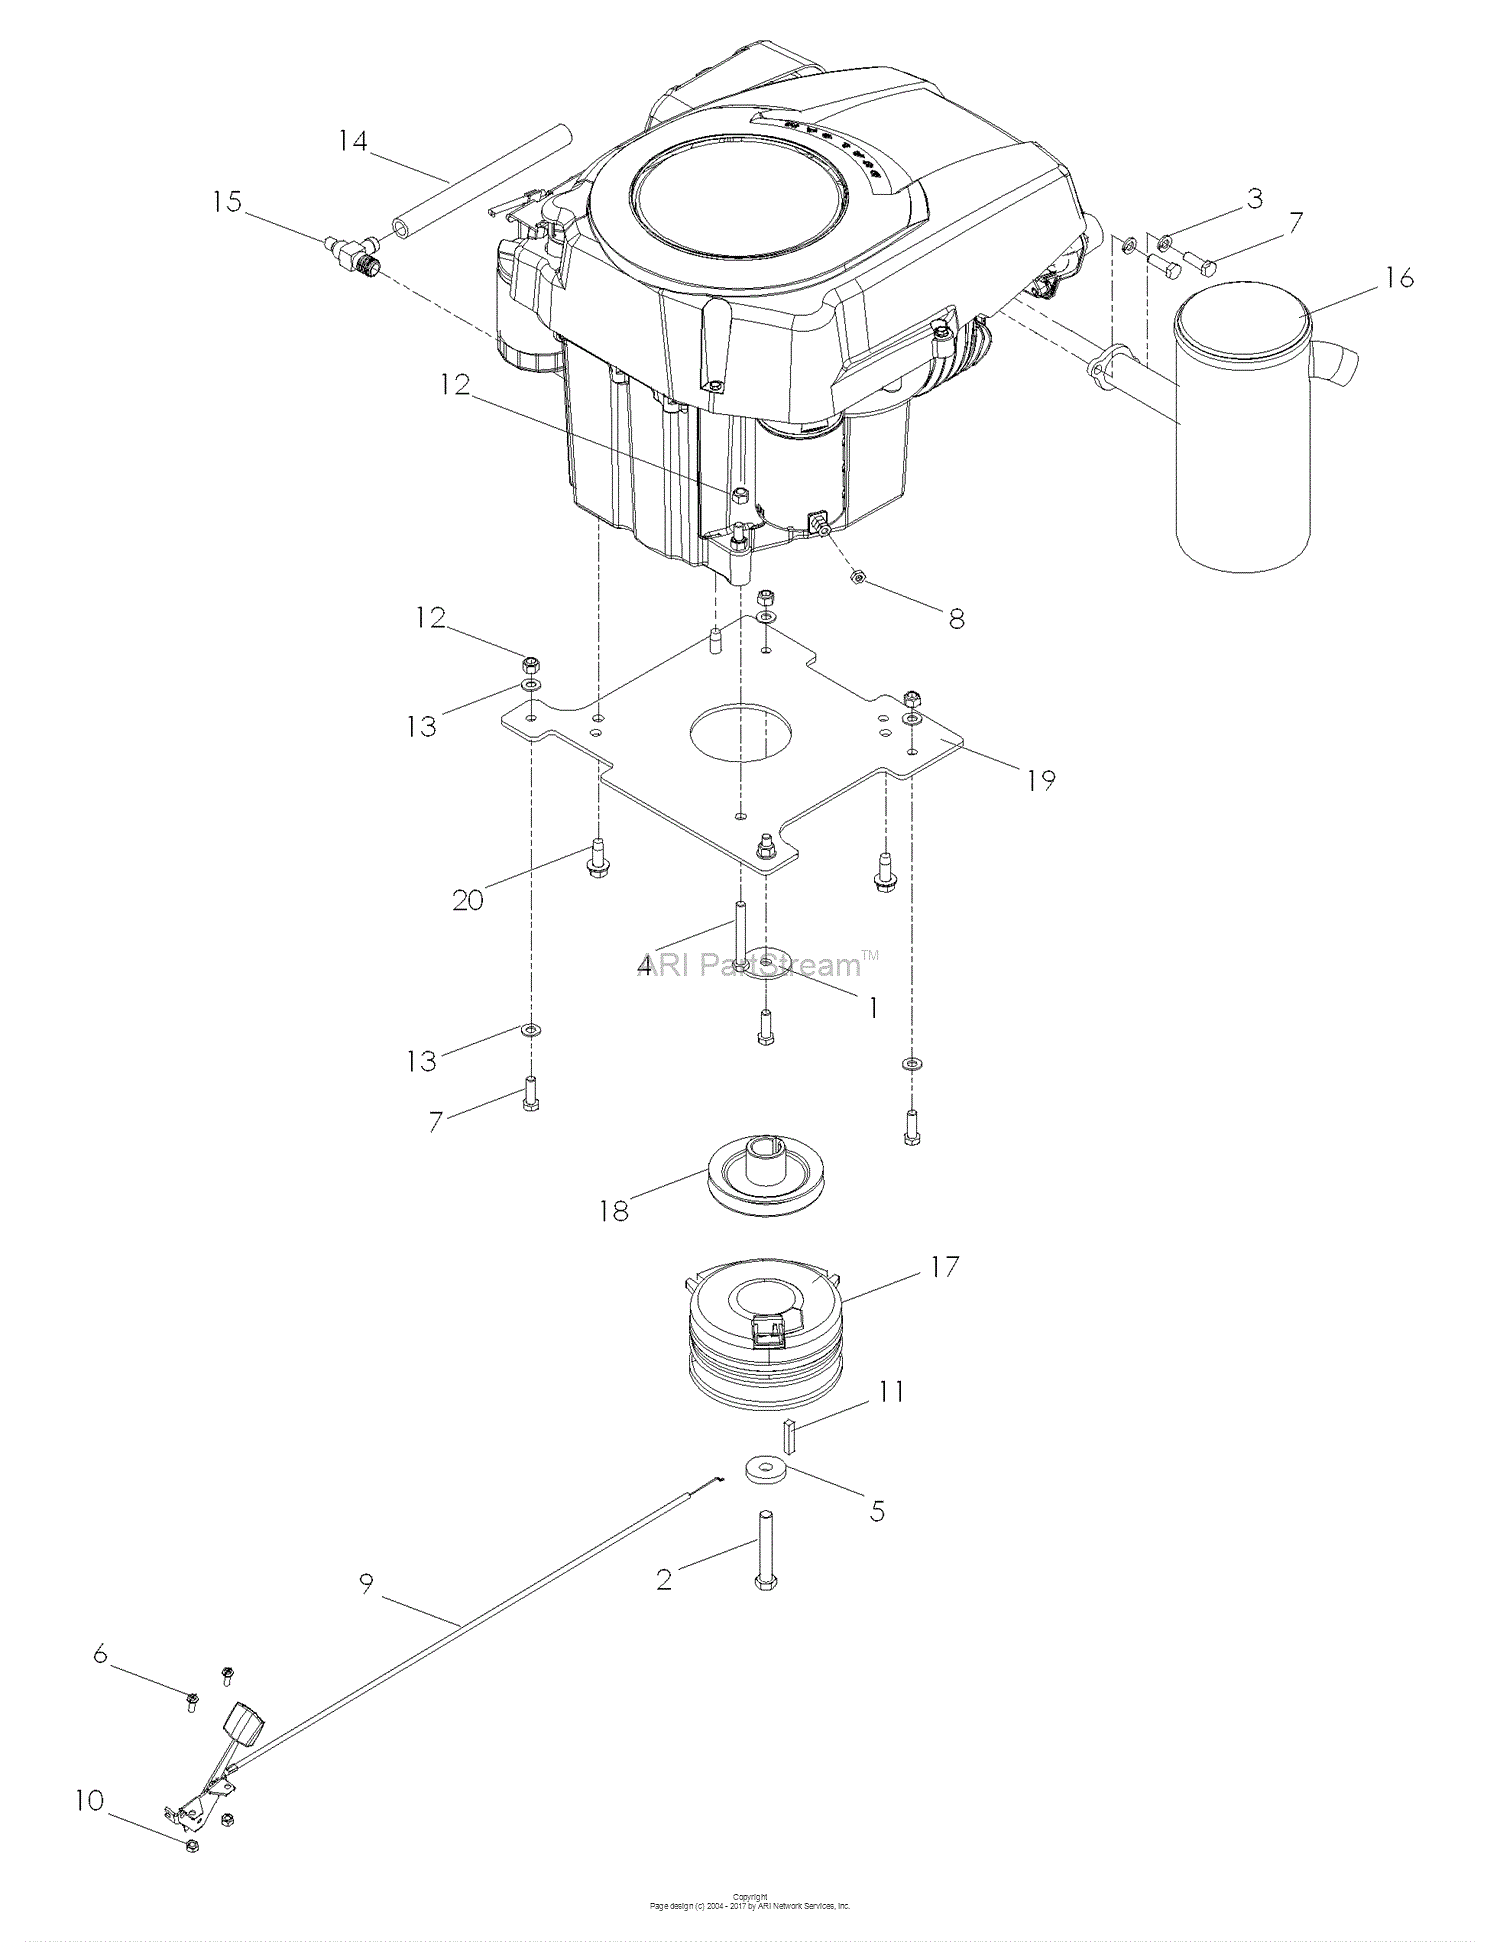 Dixon SPEEDZTR 44 20HP KOHLER - 968999538 (2008) Parts Diagram for 